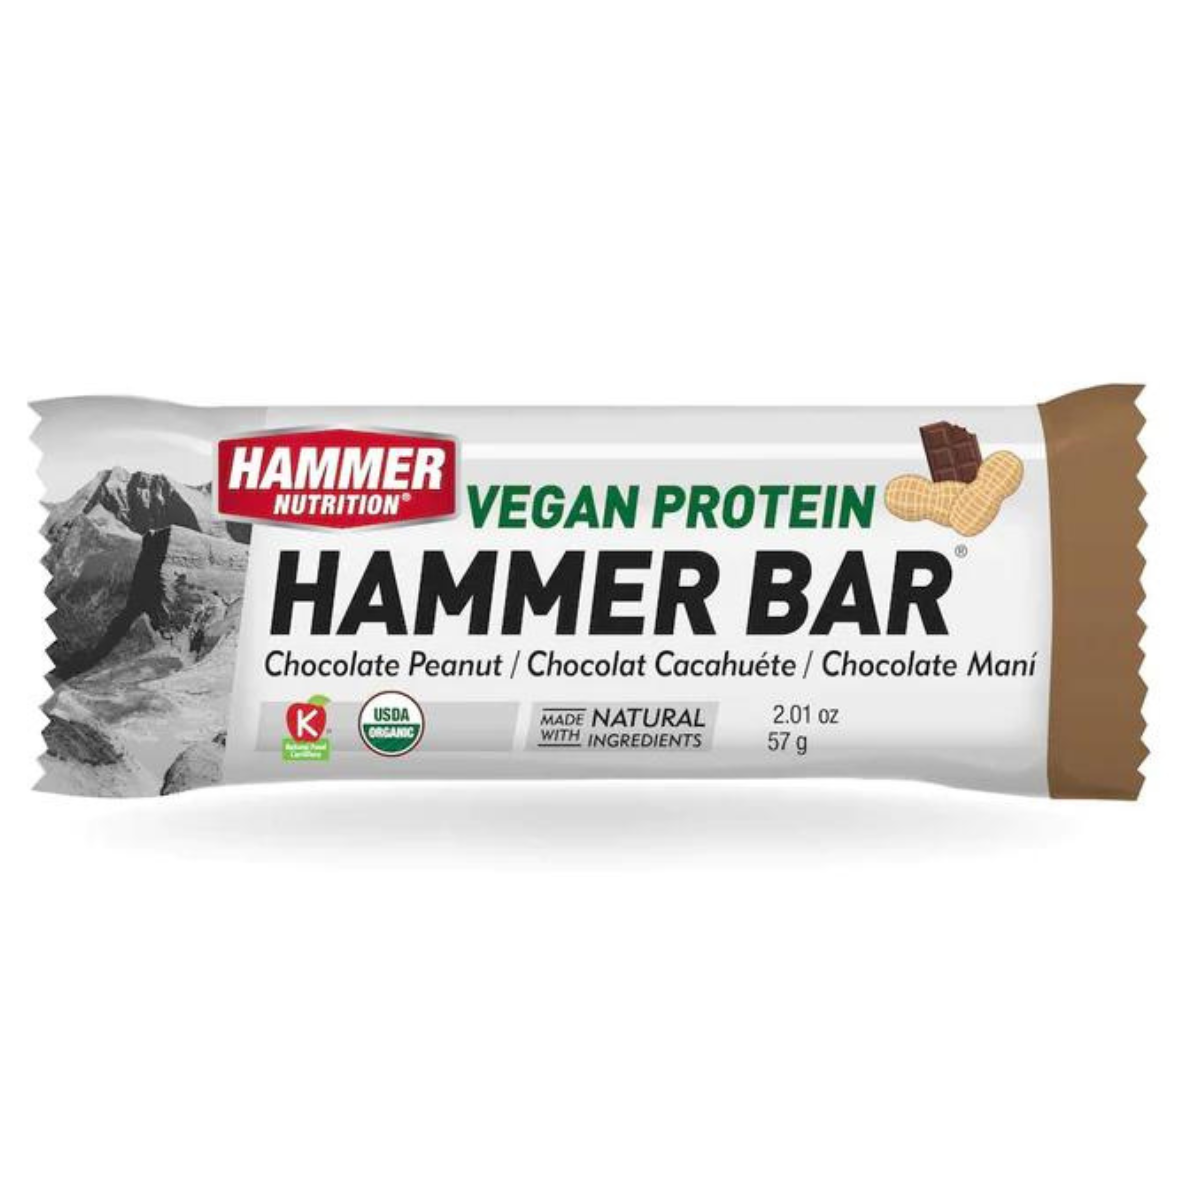 Hammer Nutrition vegan protein bars in chocolate peanut flavour